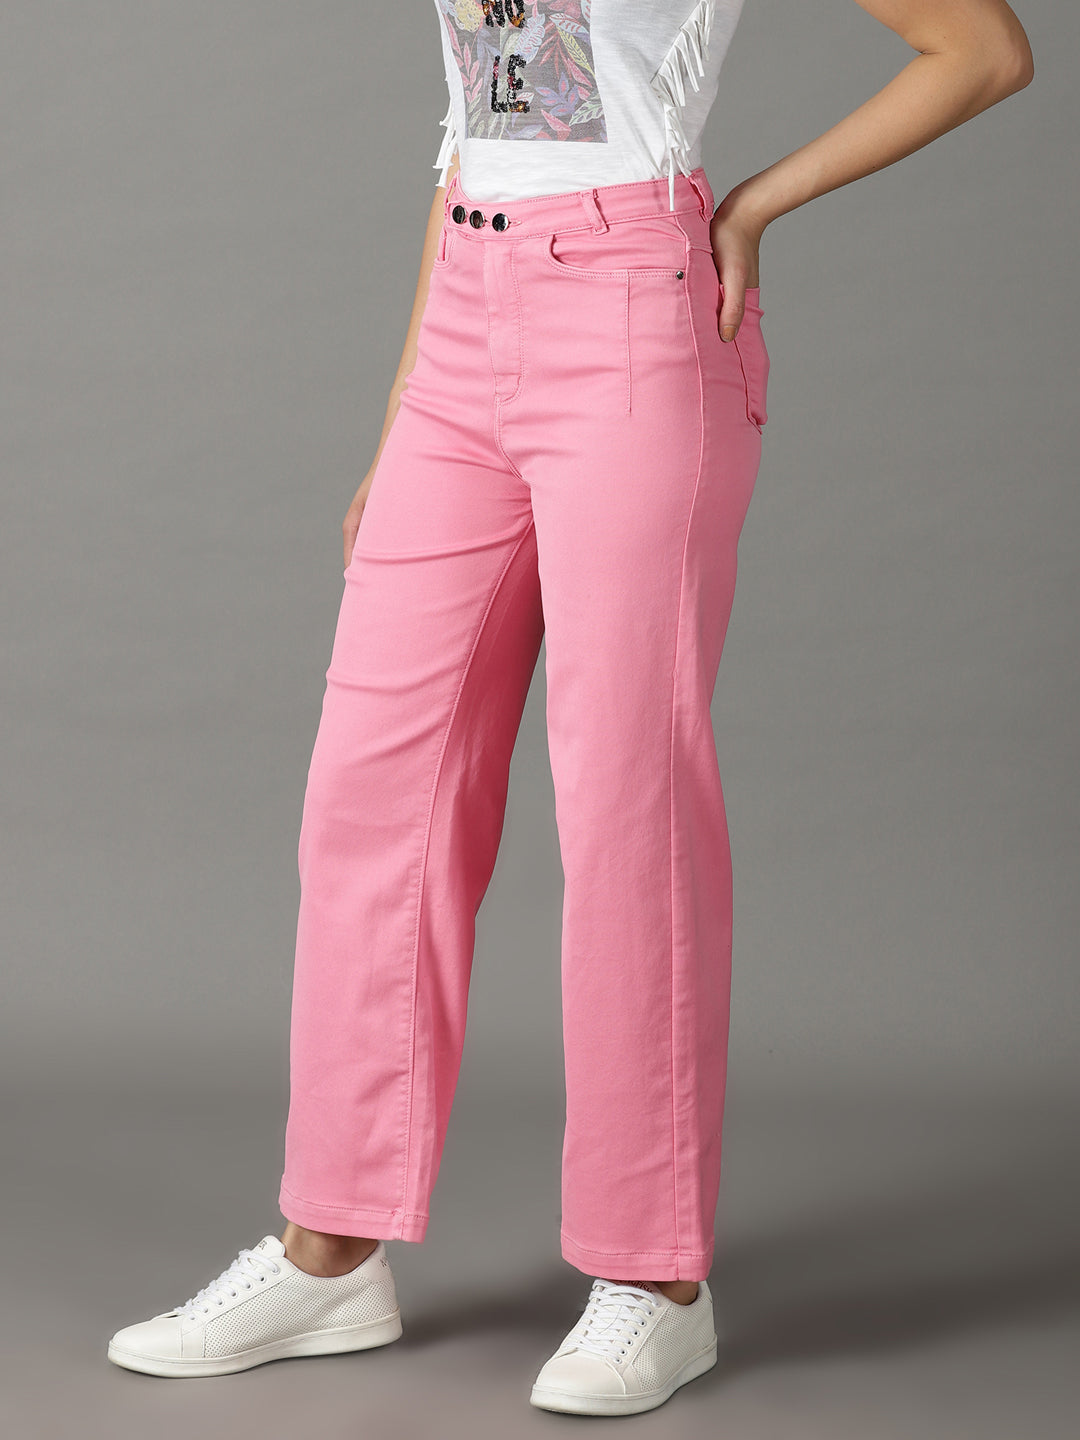 Women's Pink Solid Wide Leg Denim Jeans